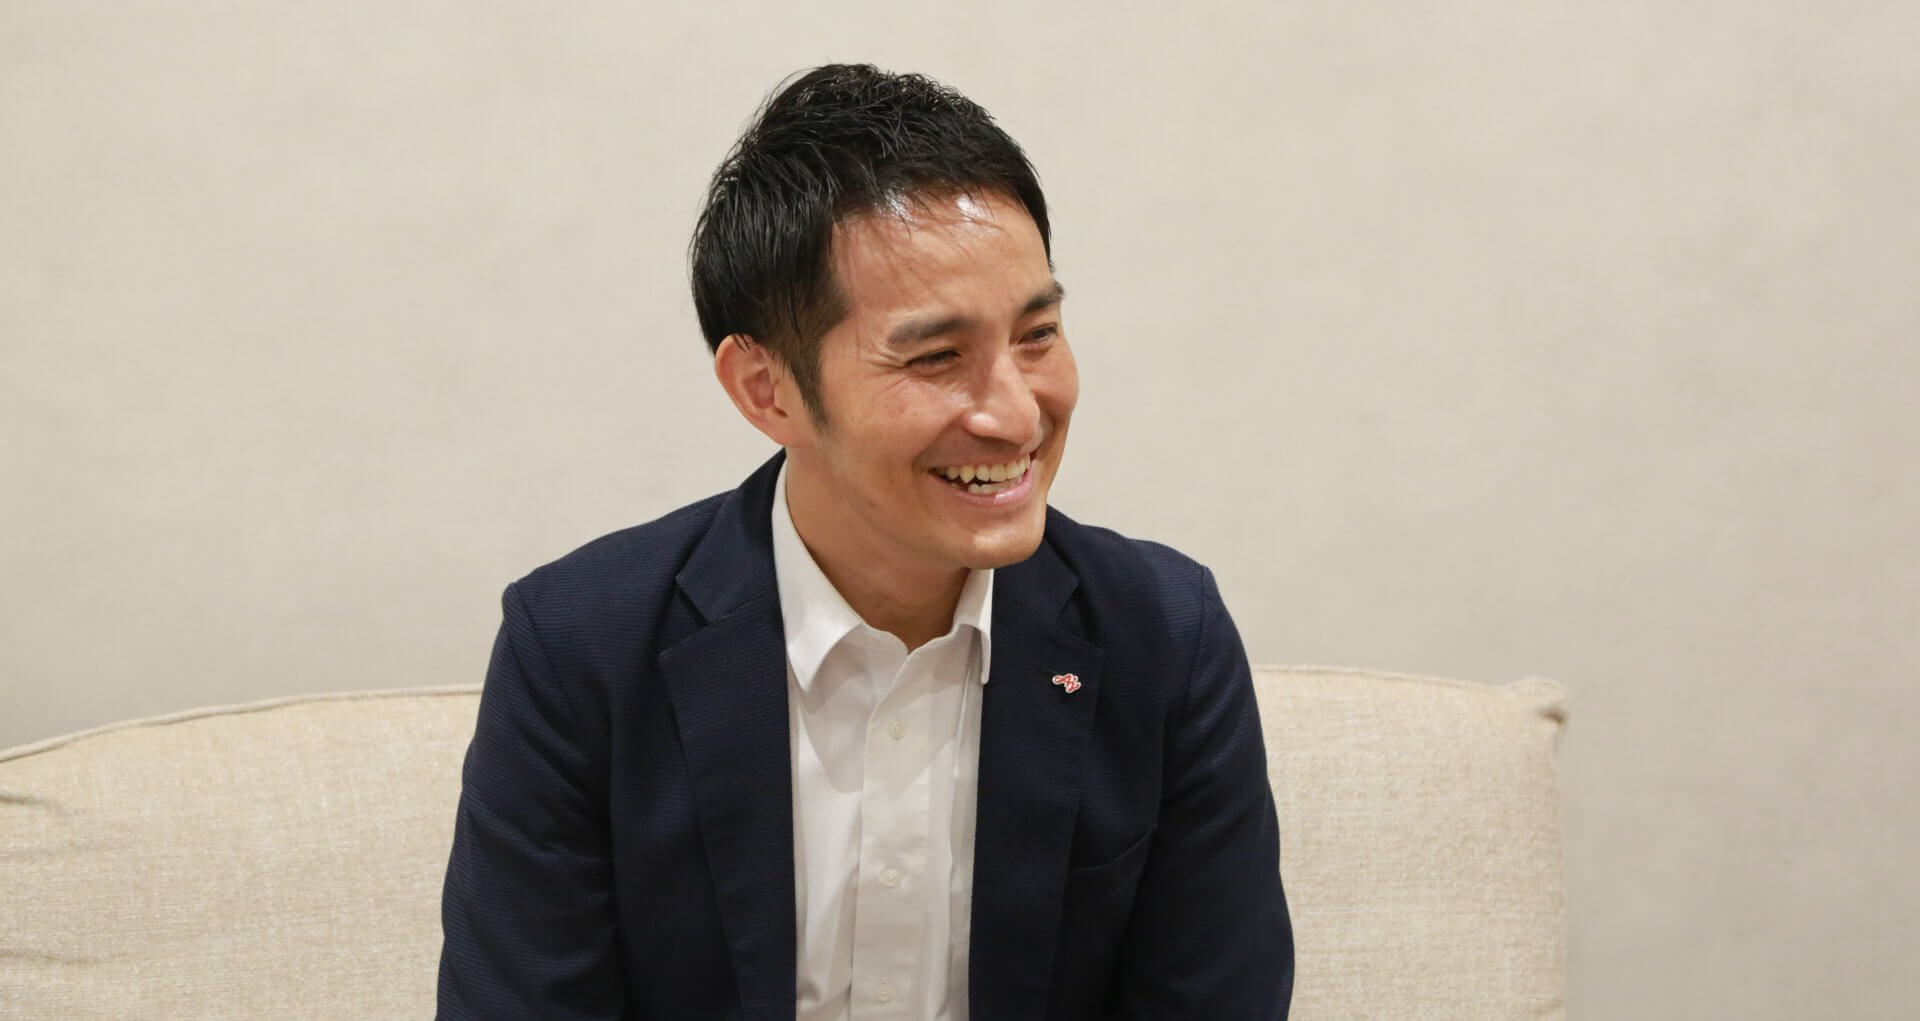 Takeuchi explaining the positive impacts of the new initiative